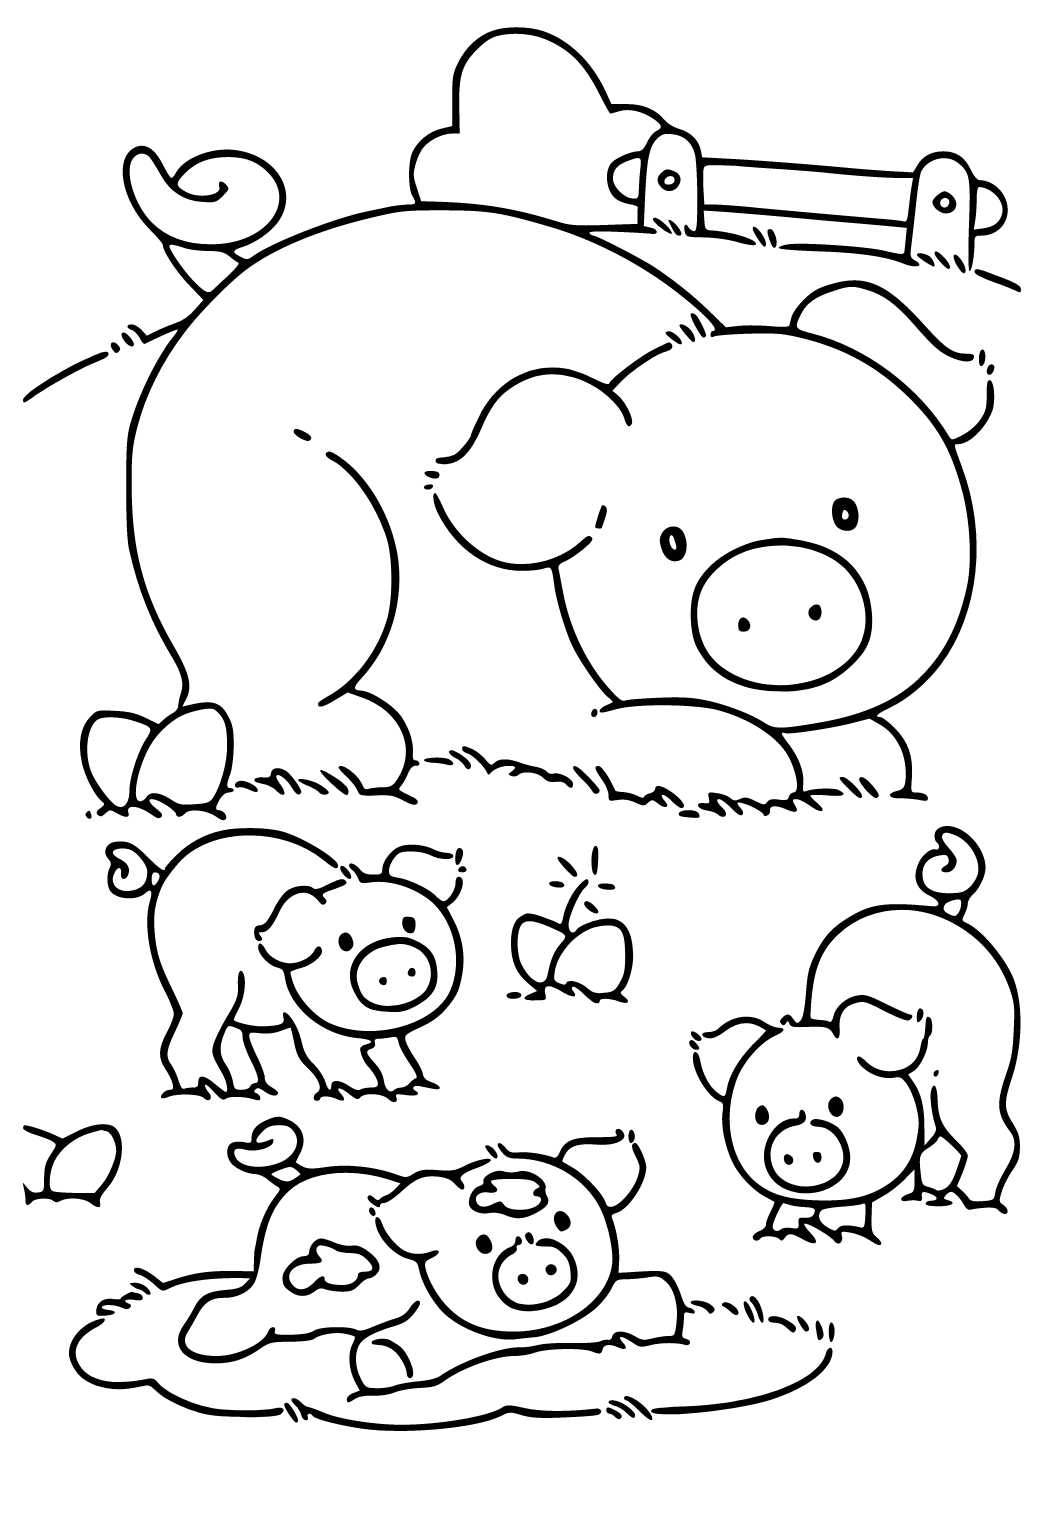 the three ninja pigs coloring